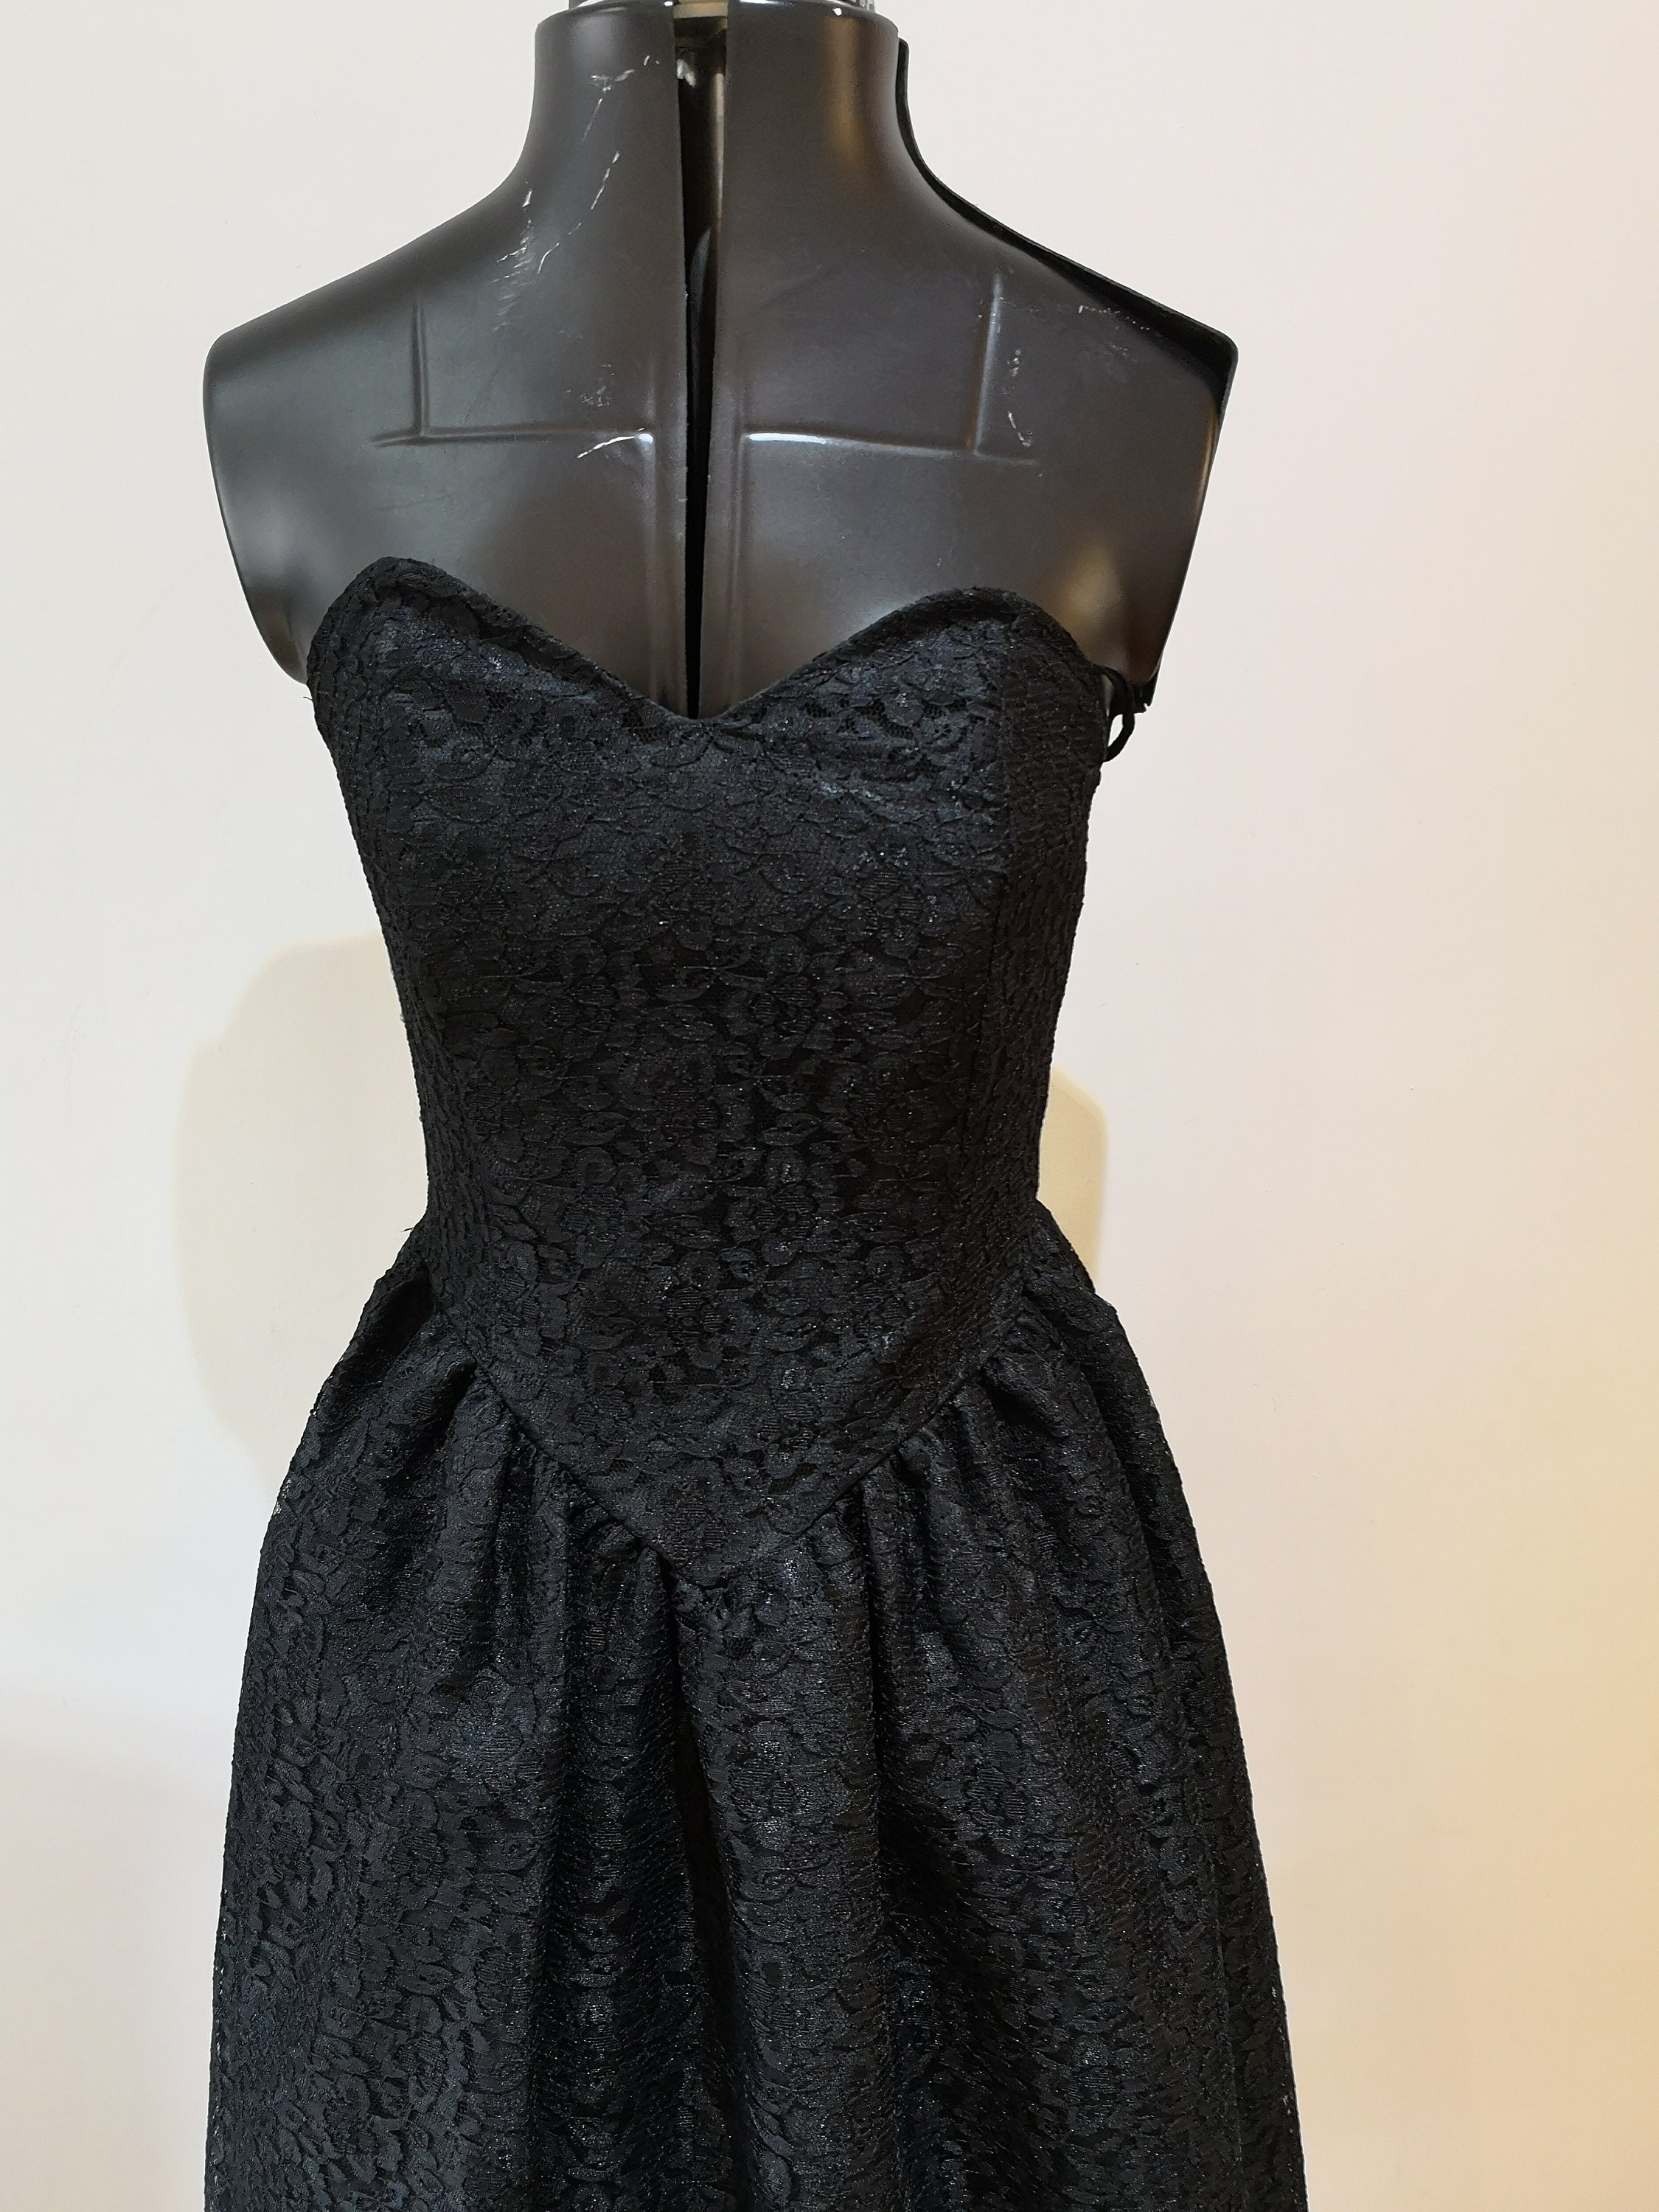 Vintage 80's or 90's black lace prom dress Debenhams | Etsy